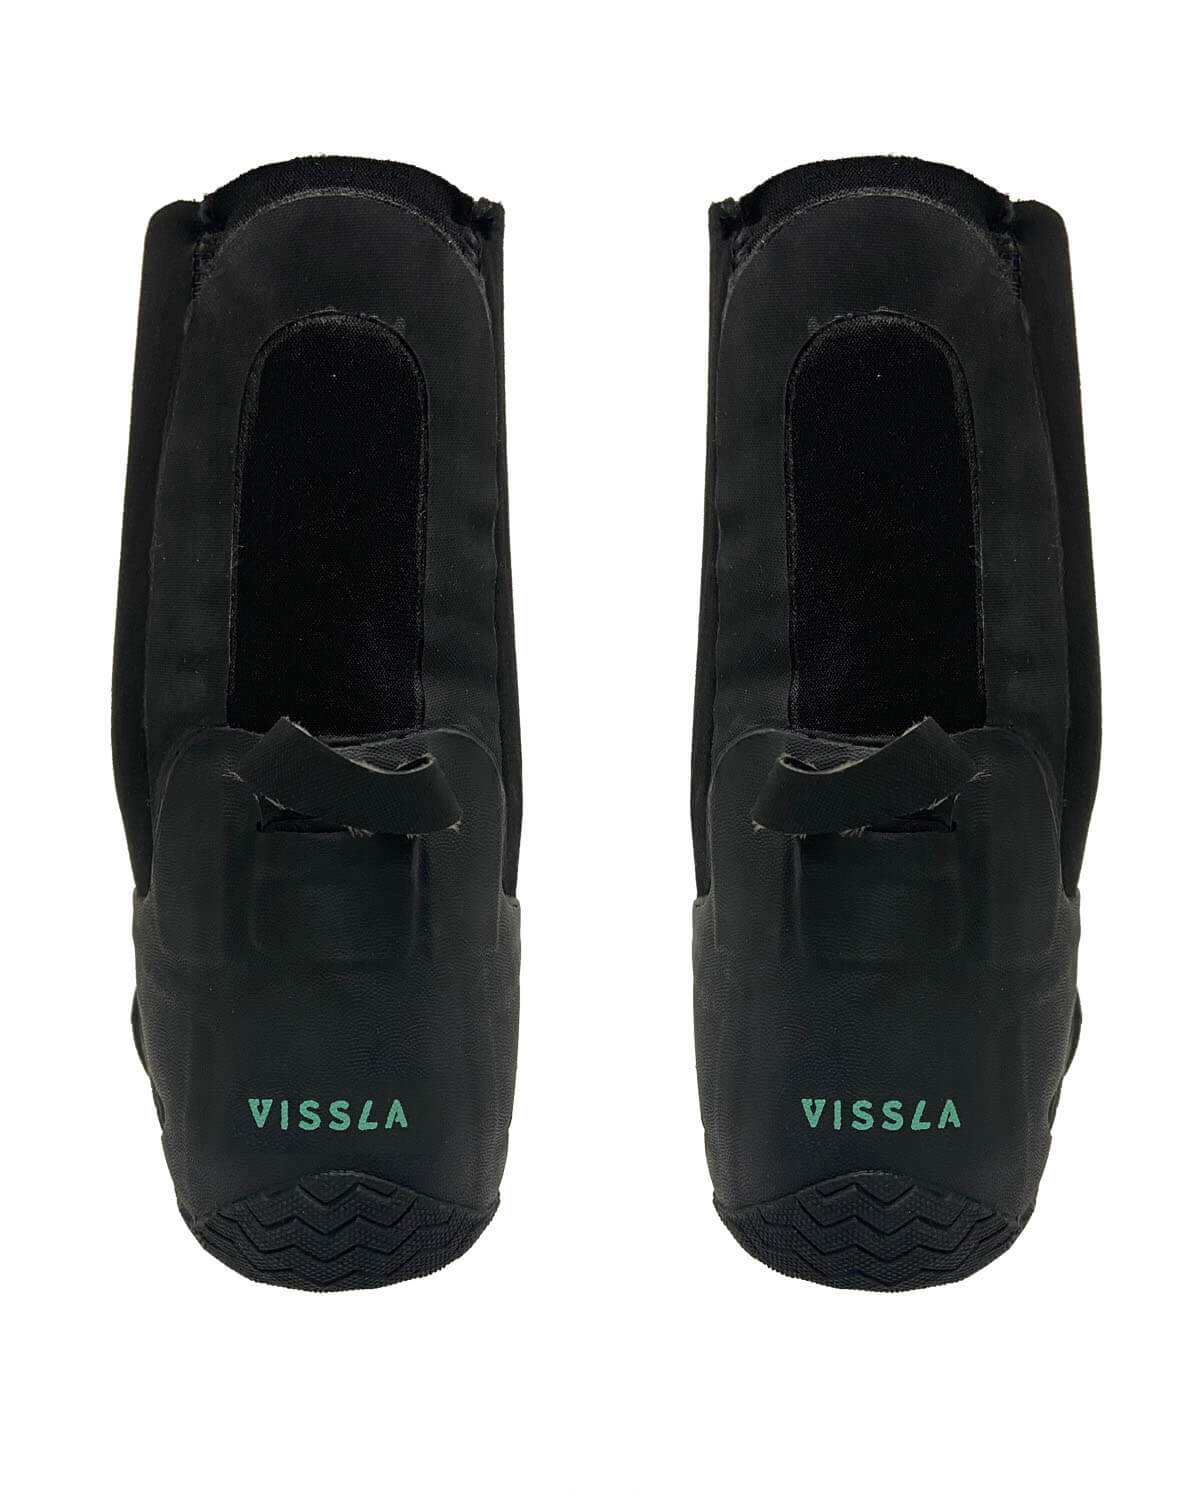 7mm Vissla 7 SEAS Round Toe Wetsuit Boots